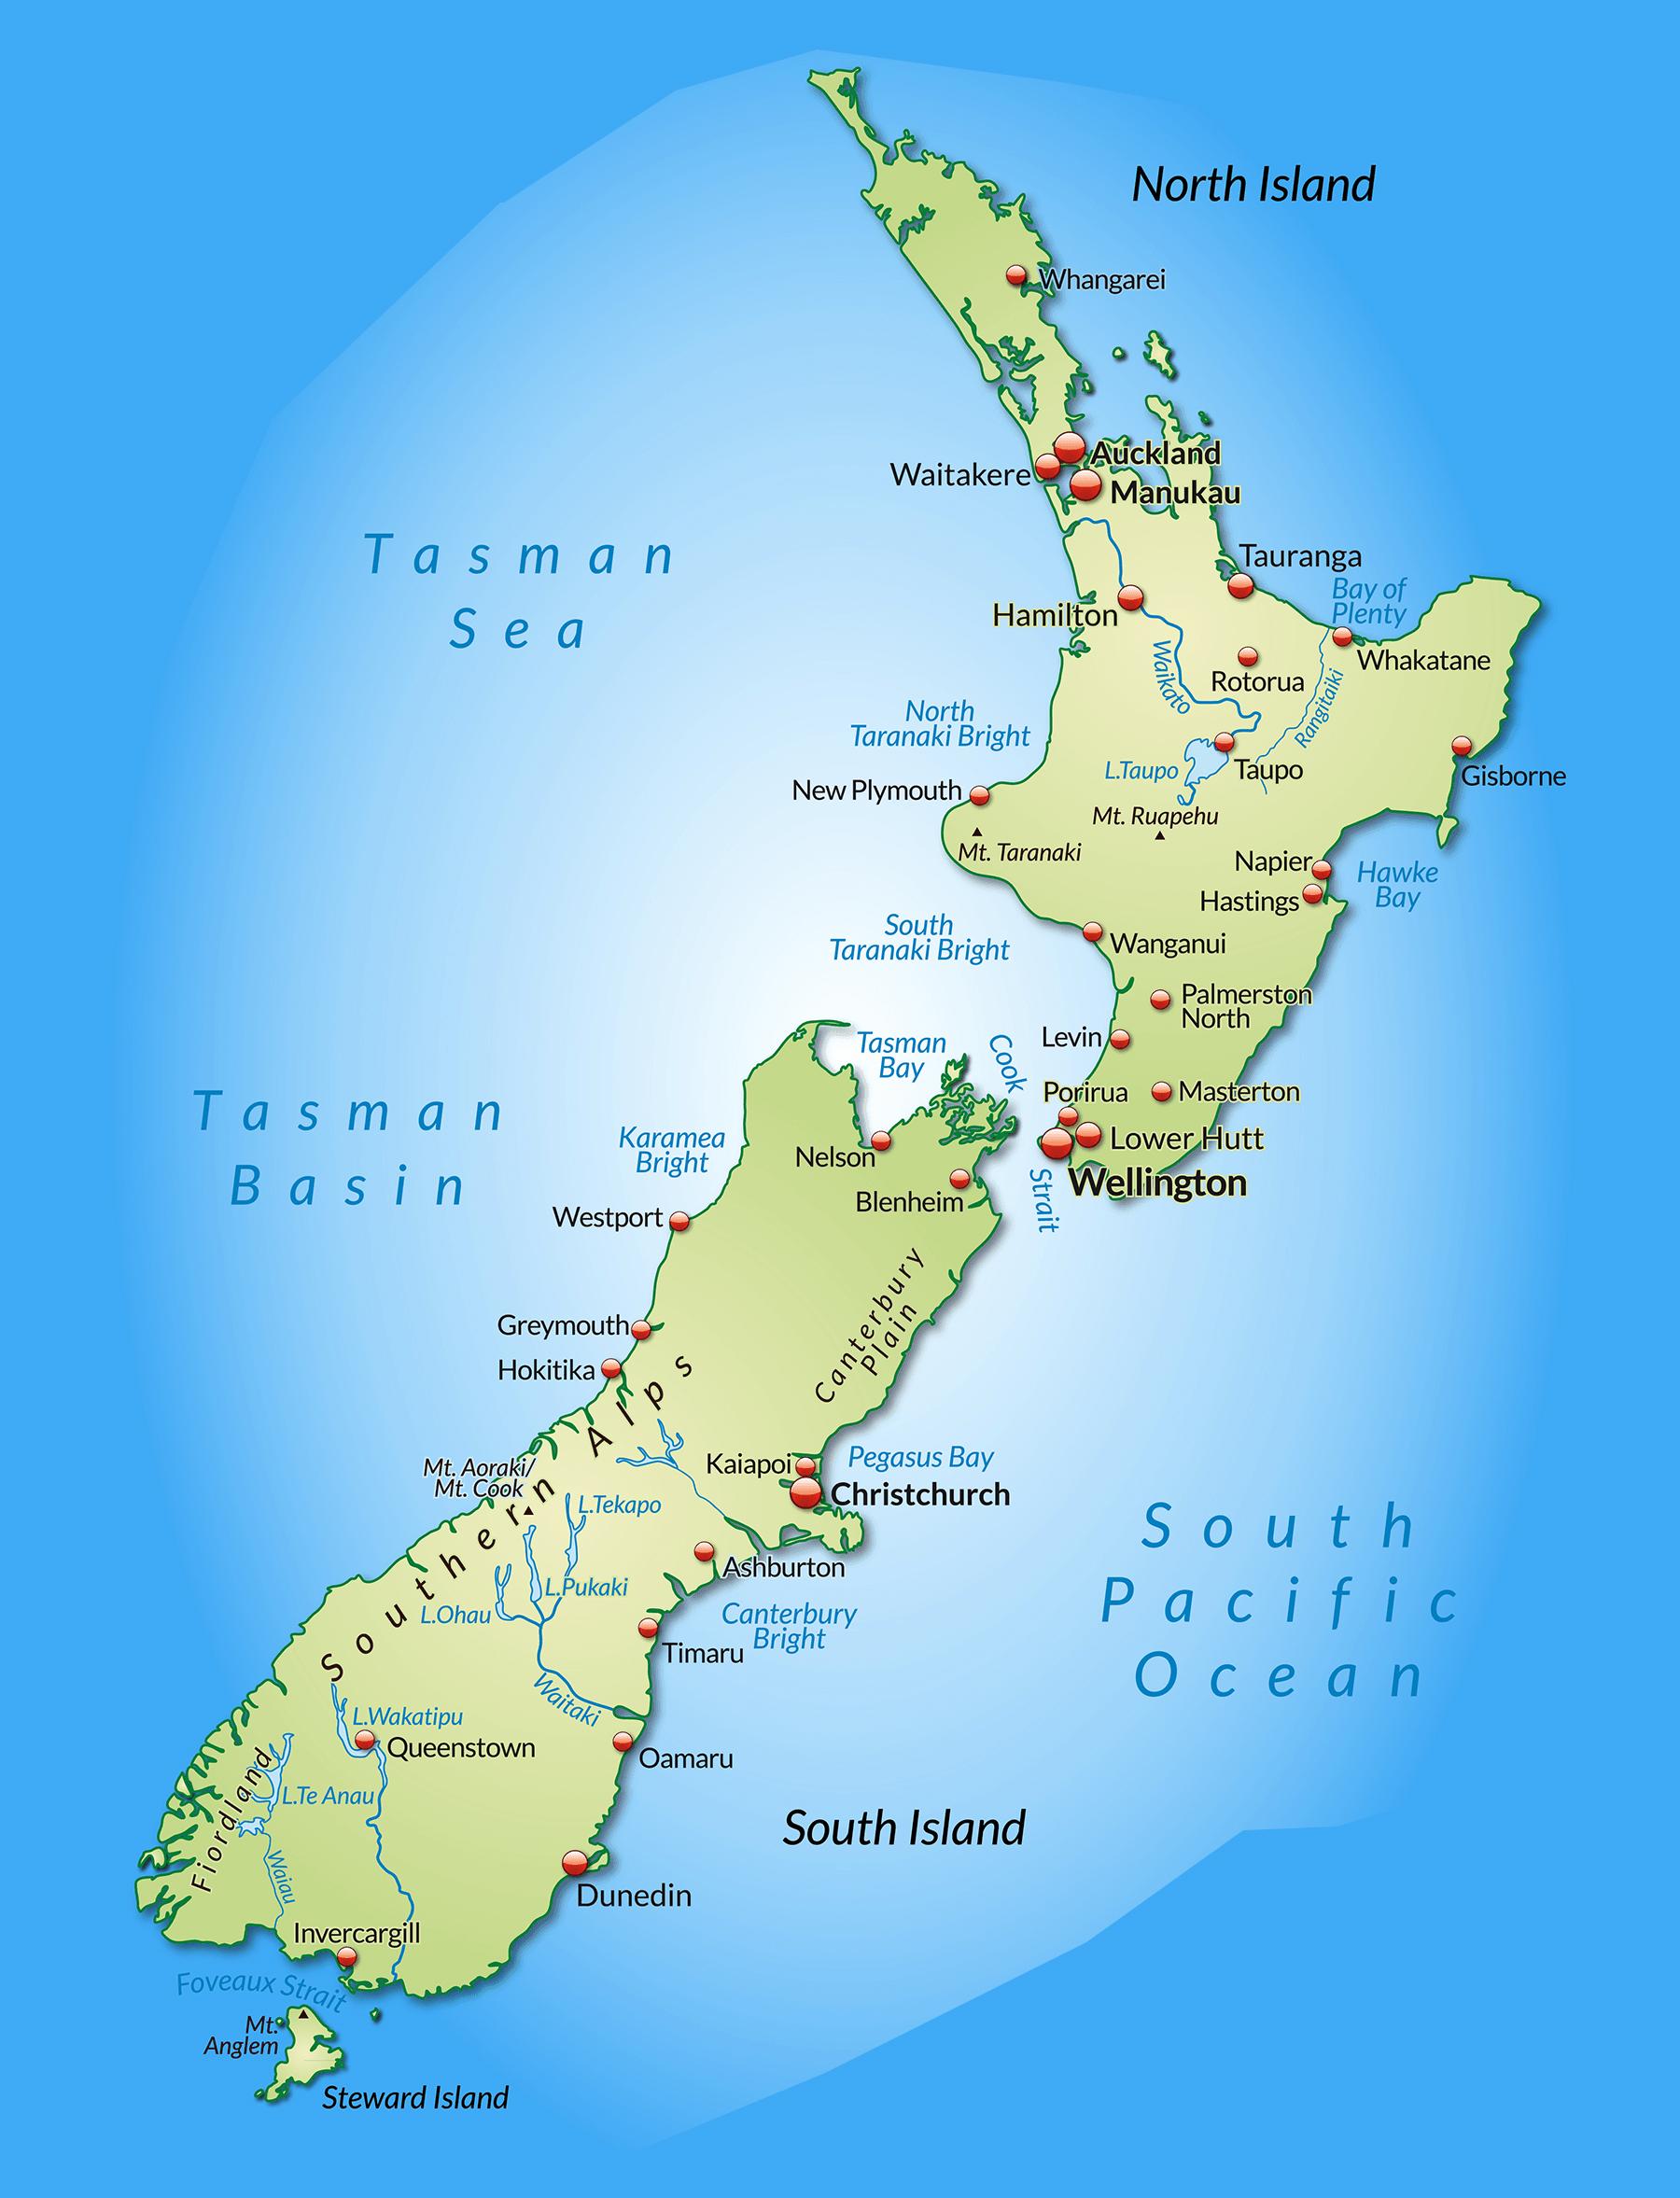 Zealand capital of new New Zealand